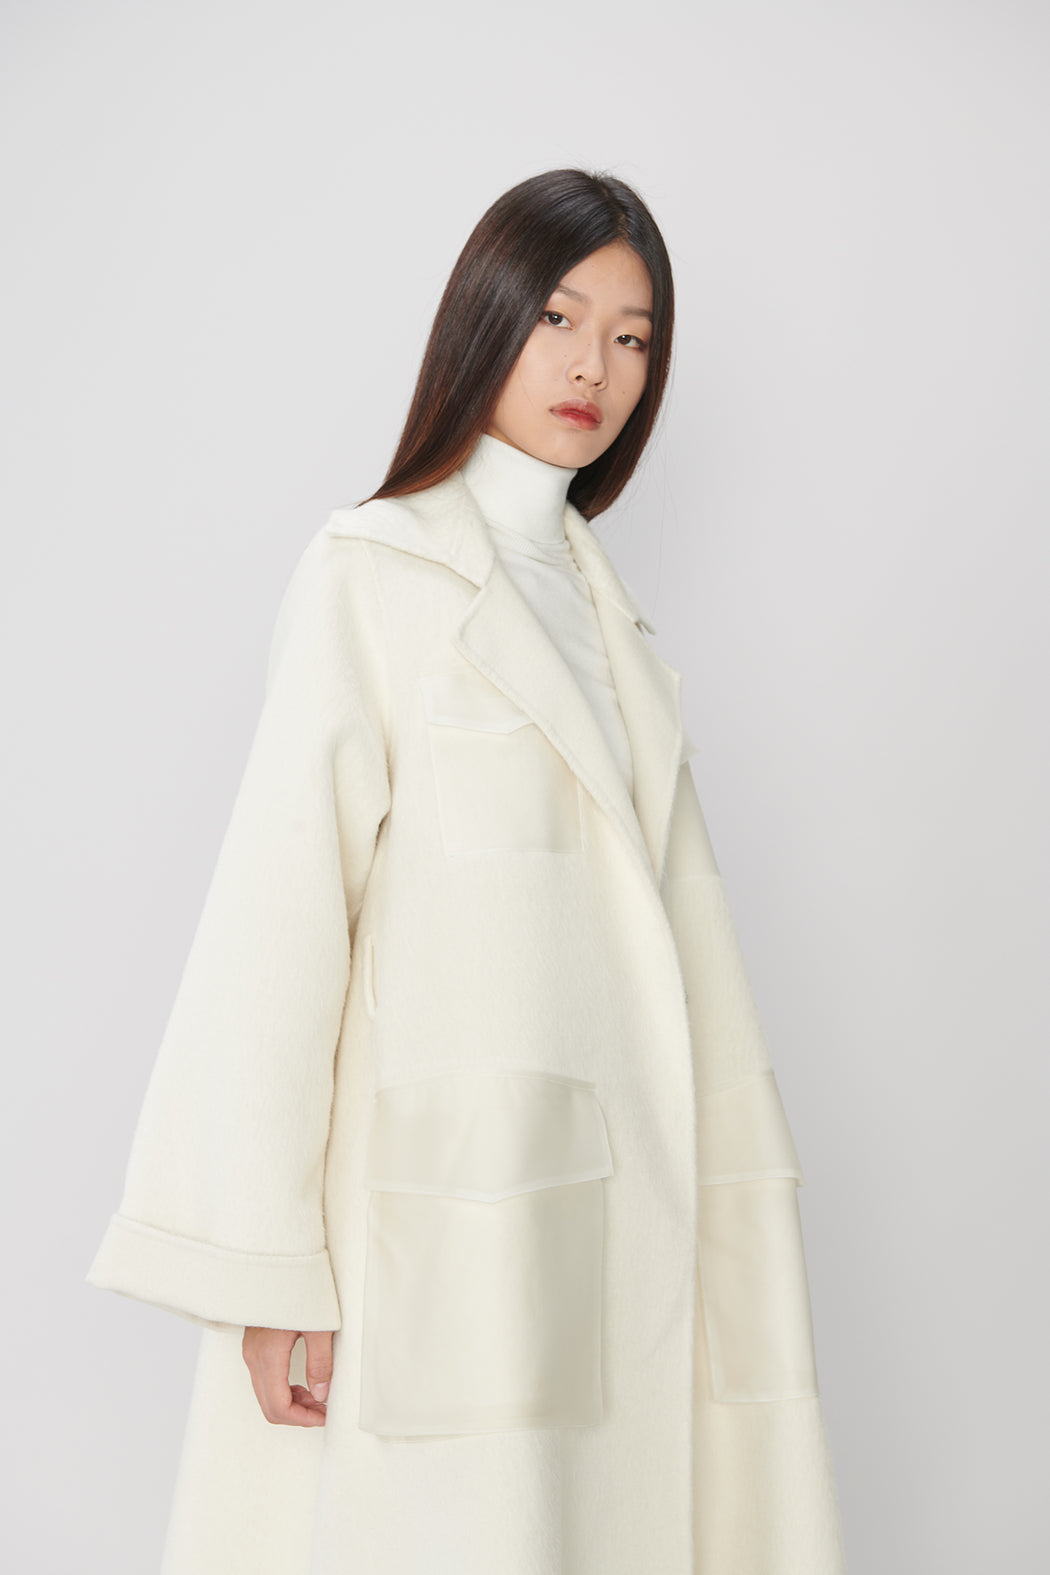 HC053 Creamy White Coat with PVC Pocket — Mute by JL